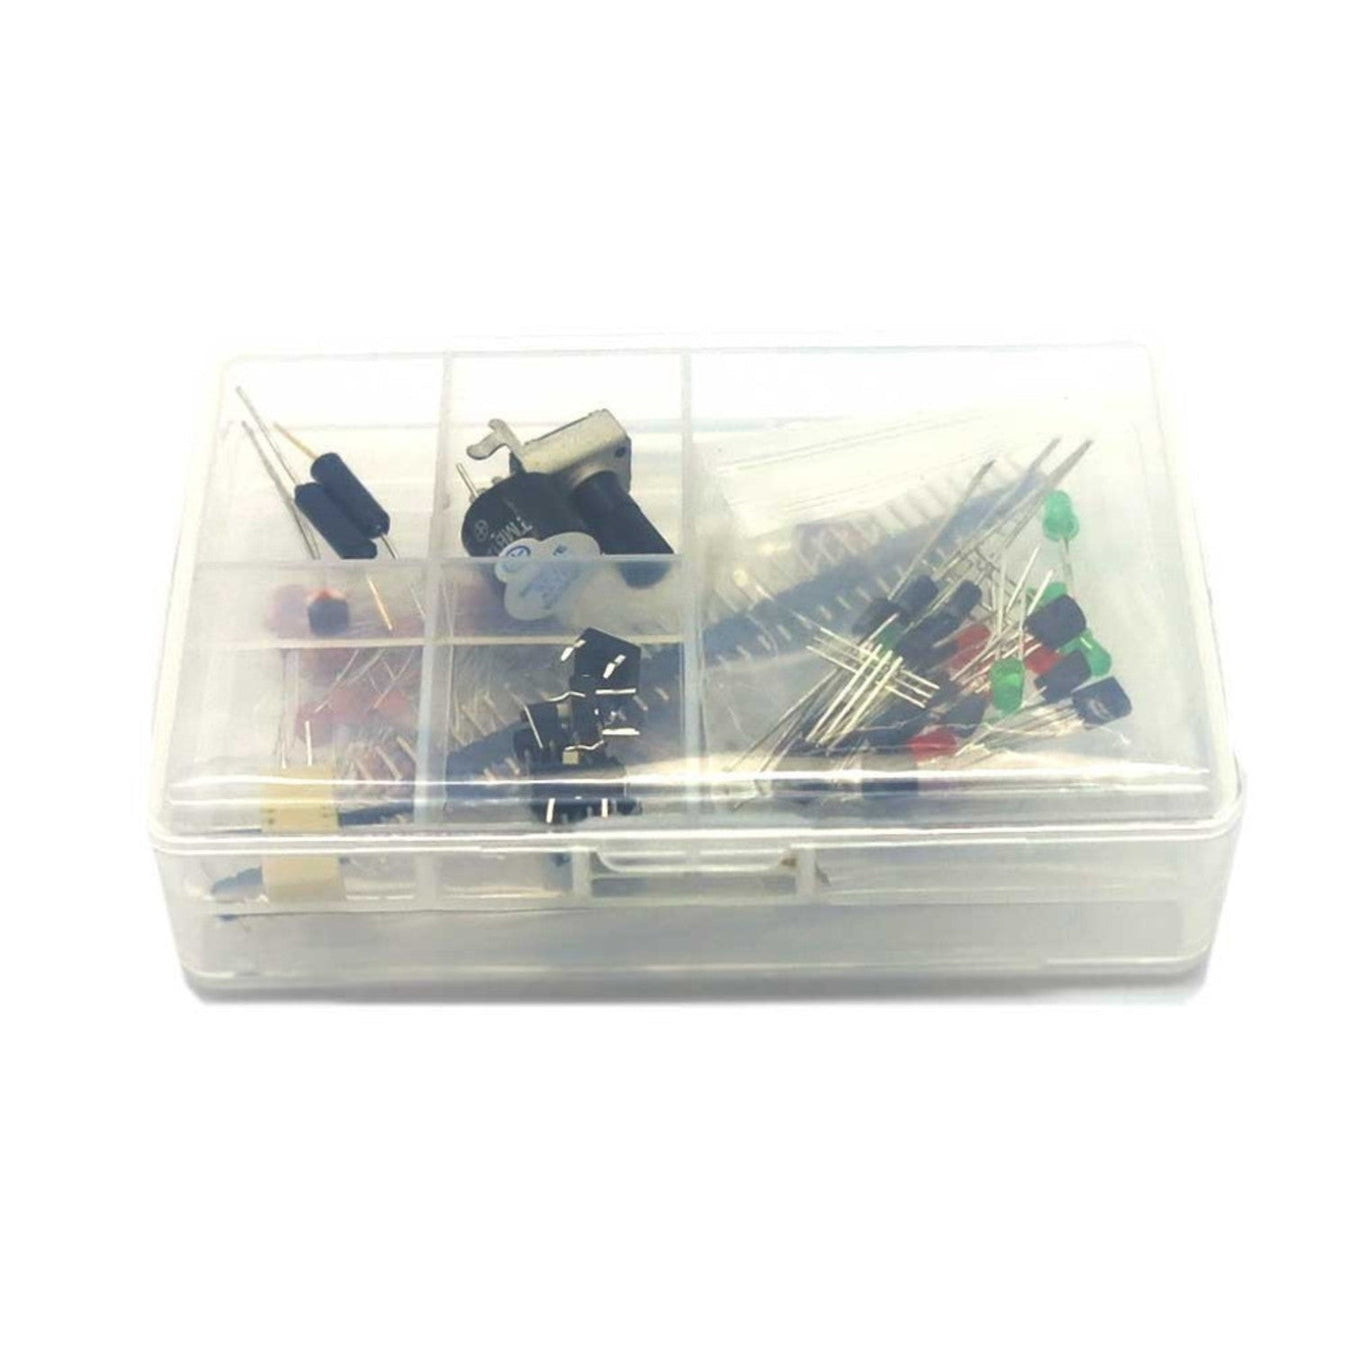 Beginner's Electronics Kits